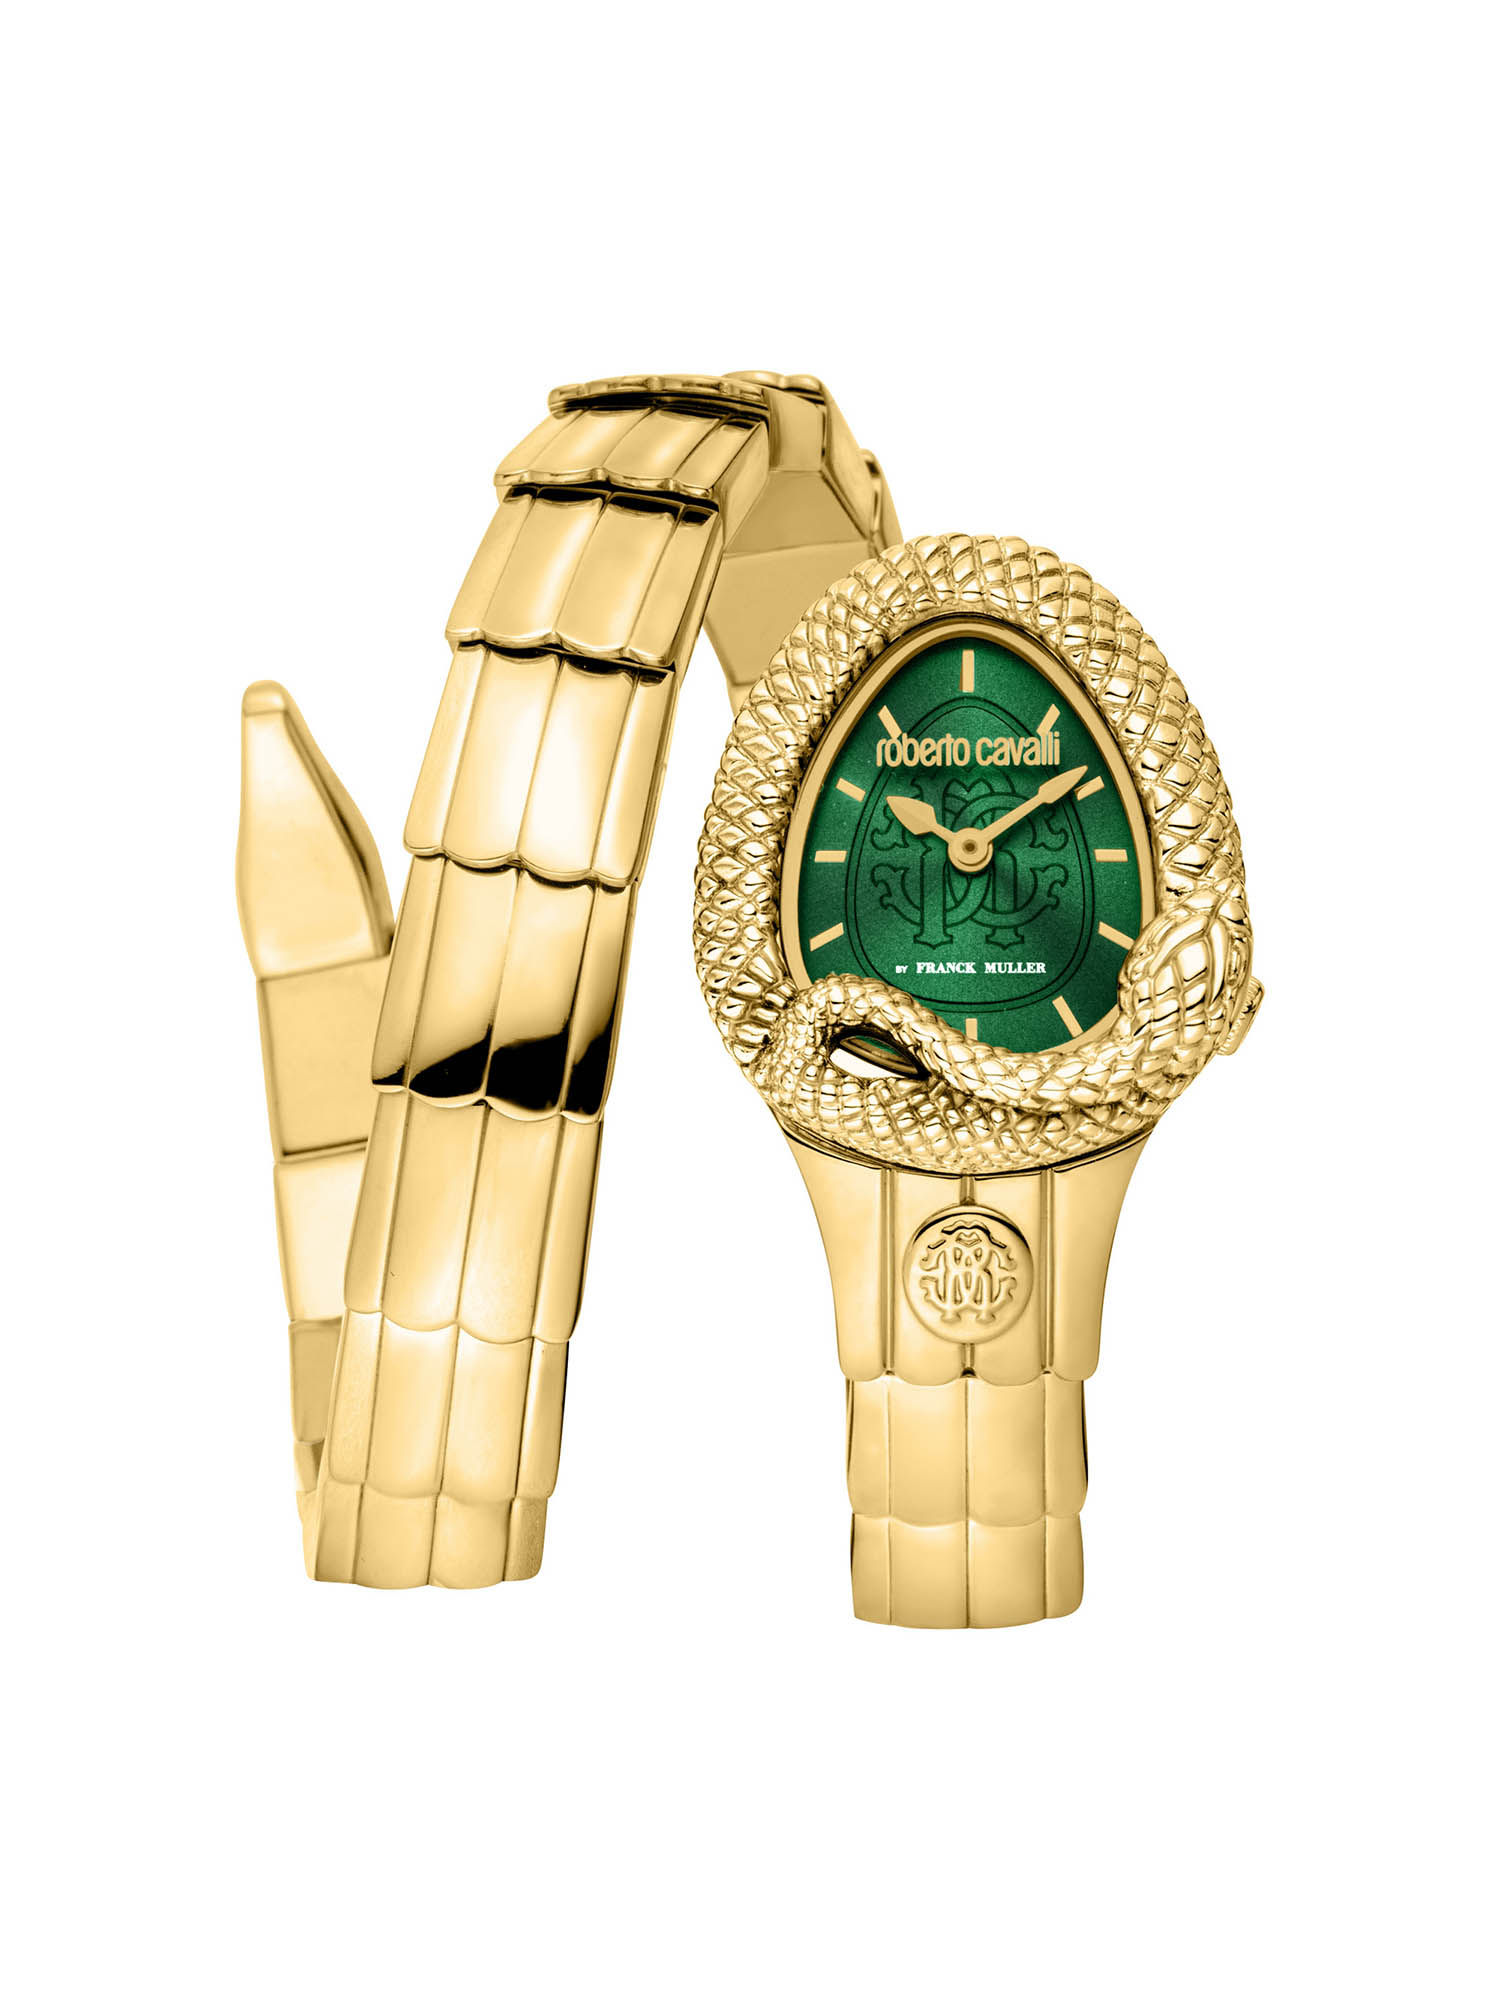 Rectangular Frank Muller Watches at best price in Varanasi | ID:  2852645487862